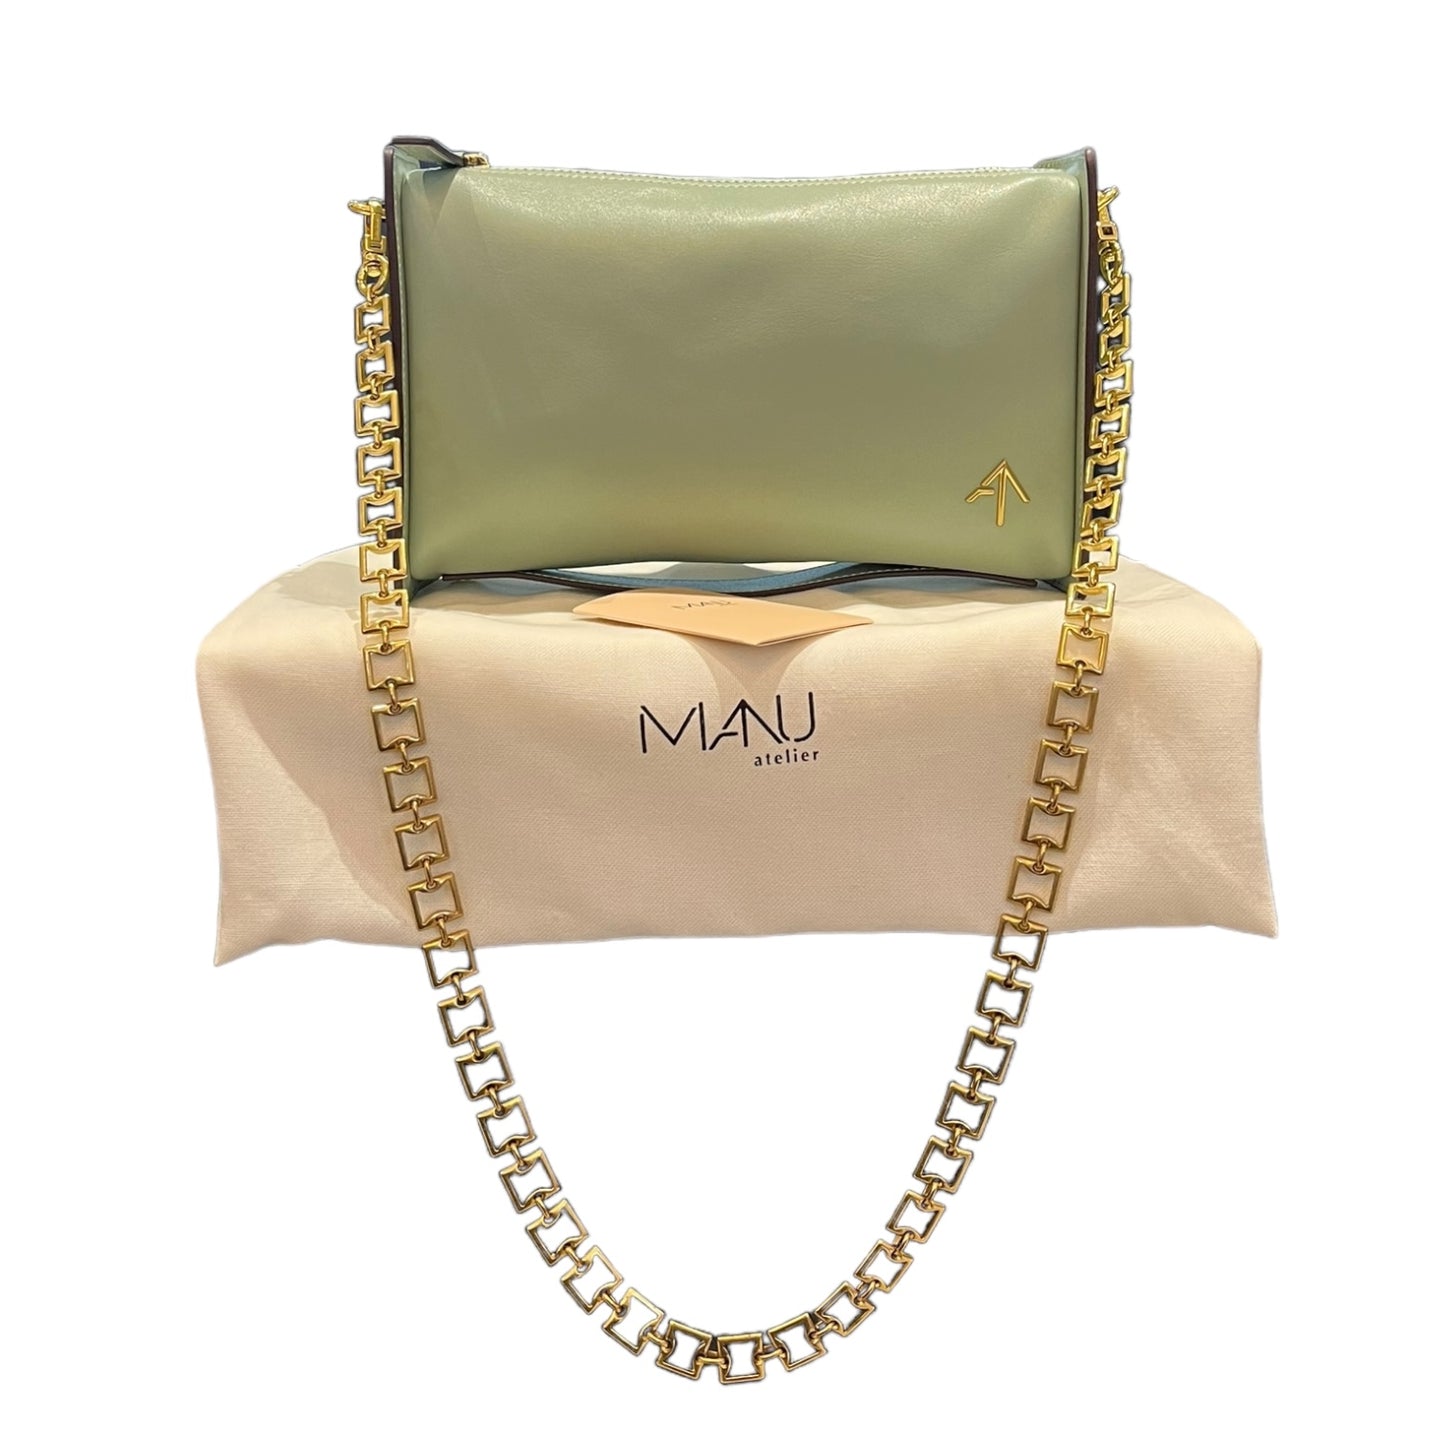 Manu Atelier Pale Green Crossbody Bag - NEW